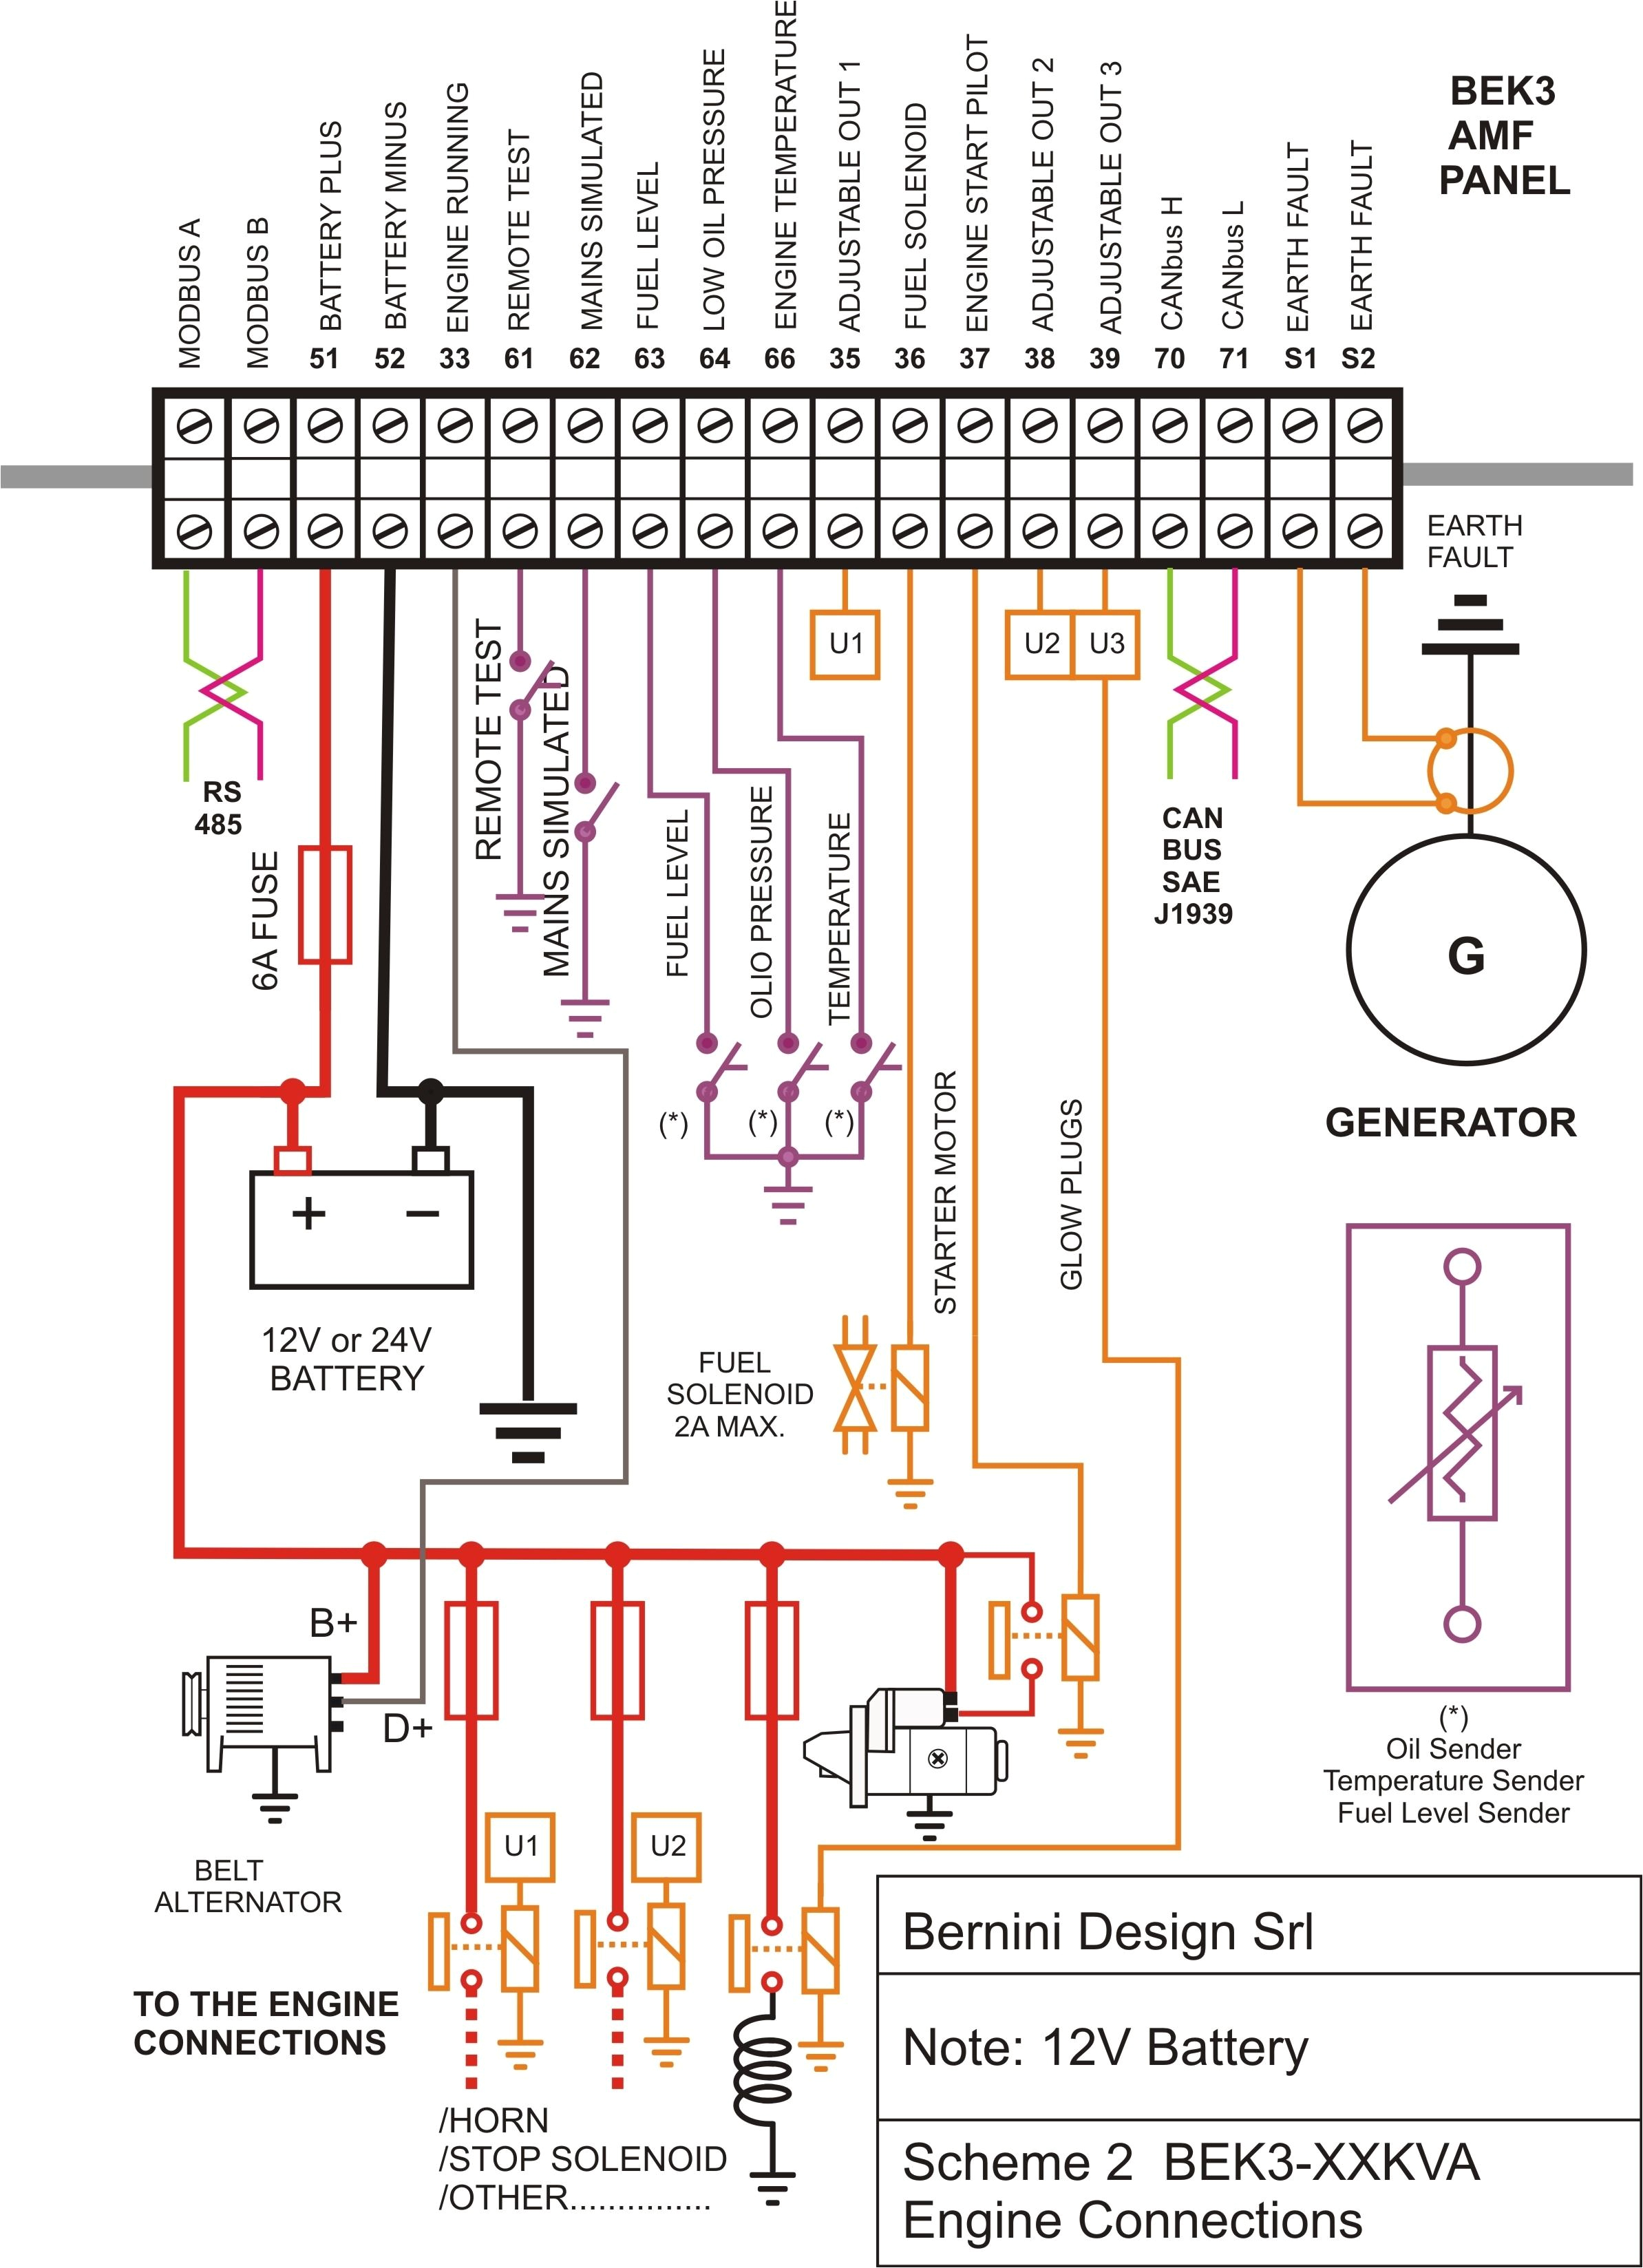 control wiring basics pdf wiring diagram for you electrical control panel wiring diagram pdf basic electrical